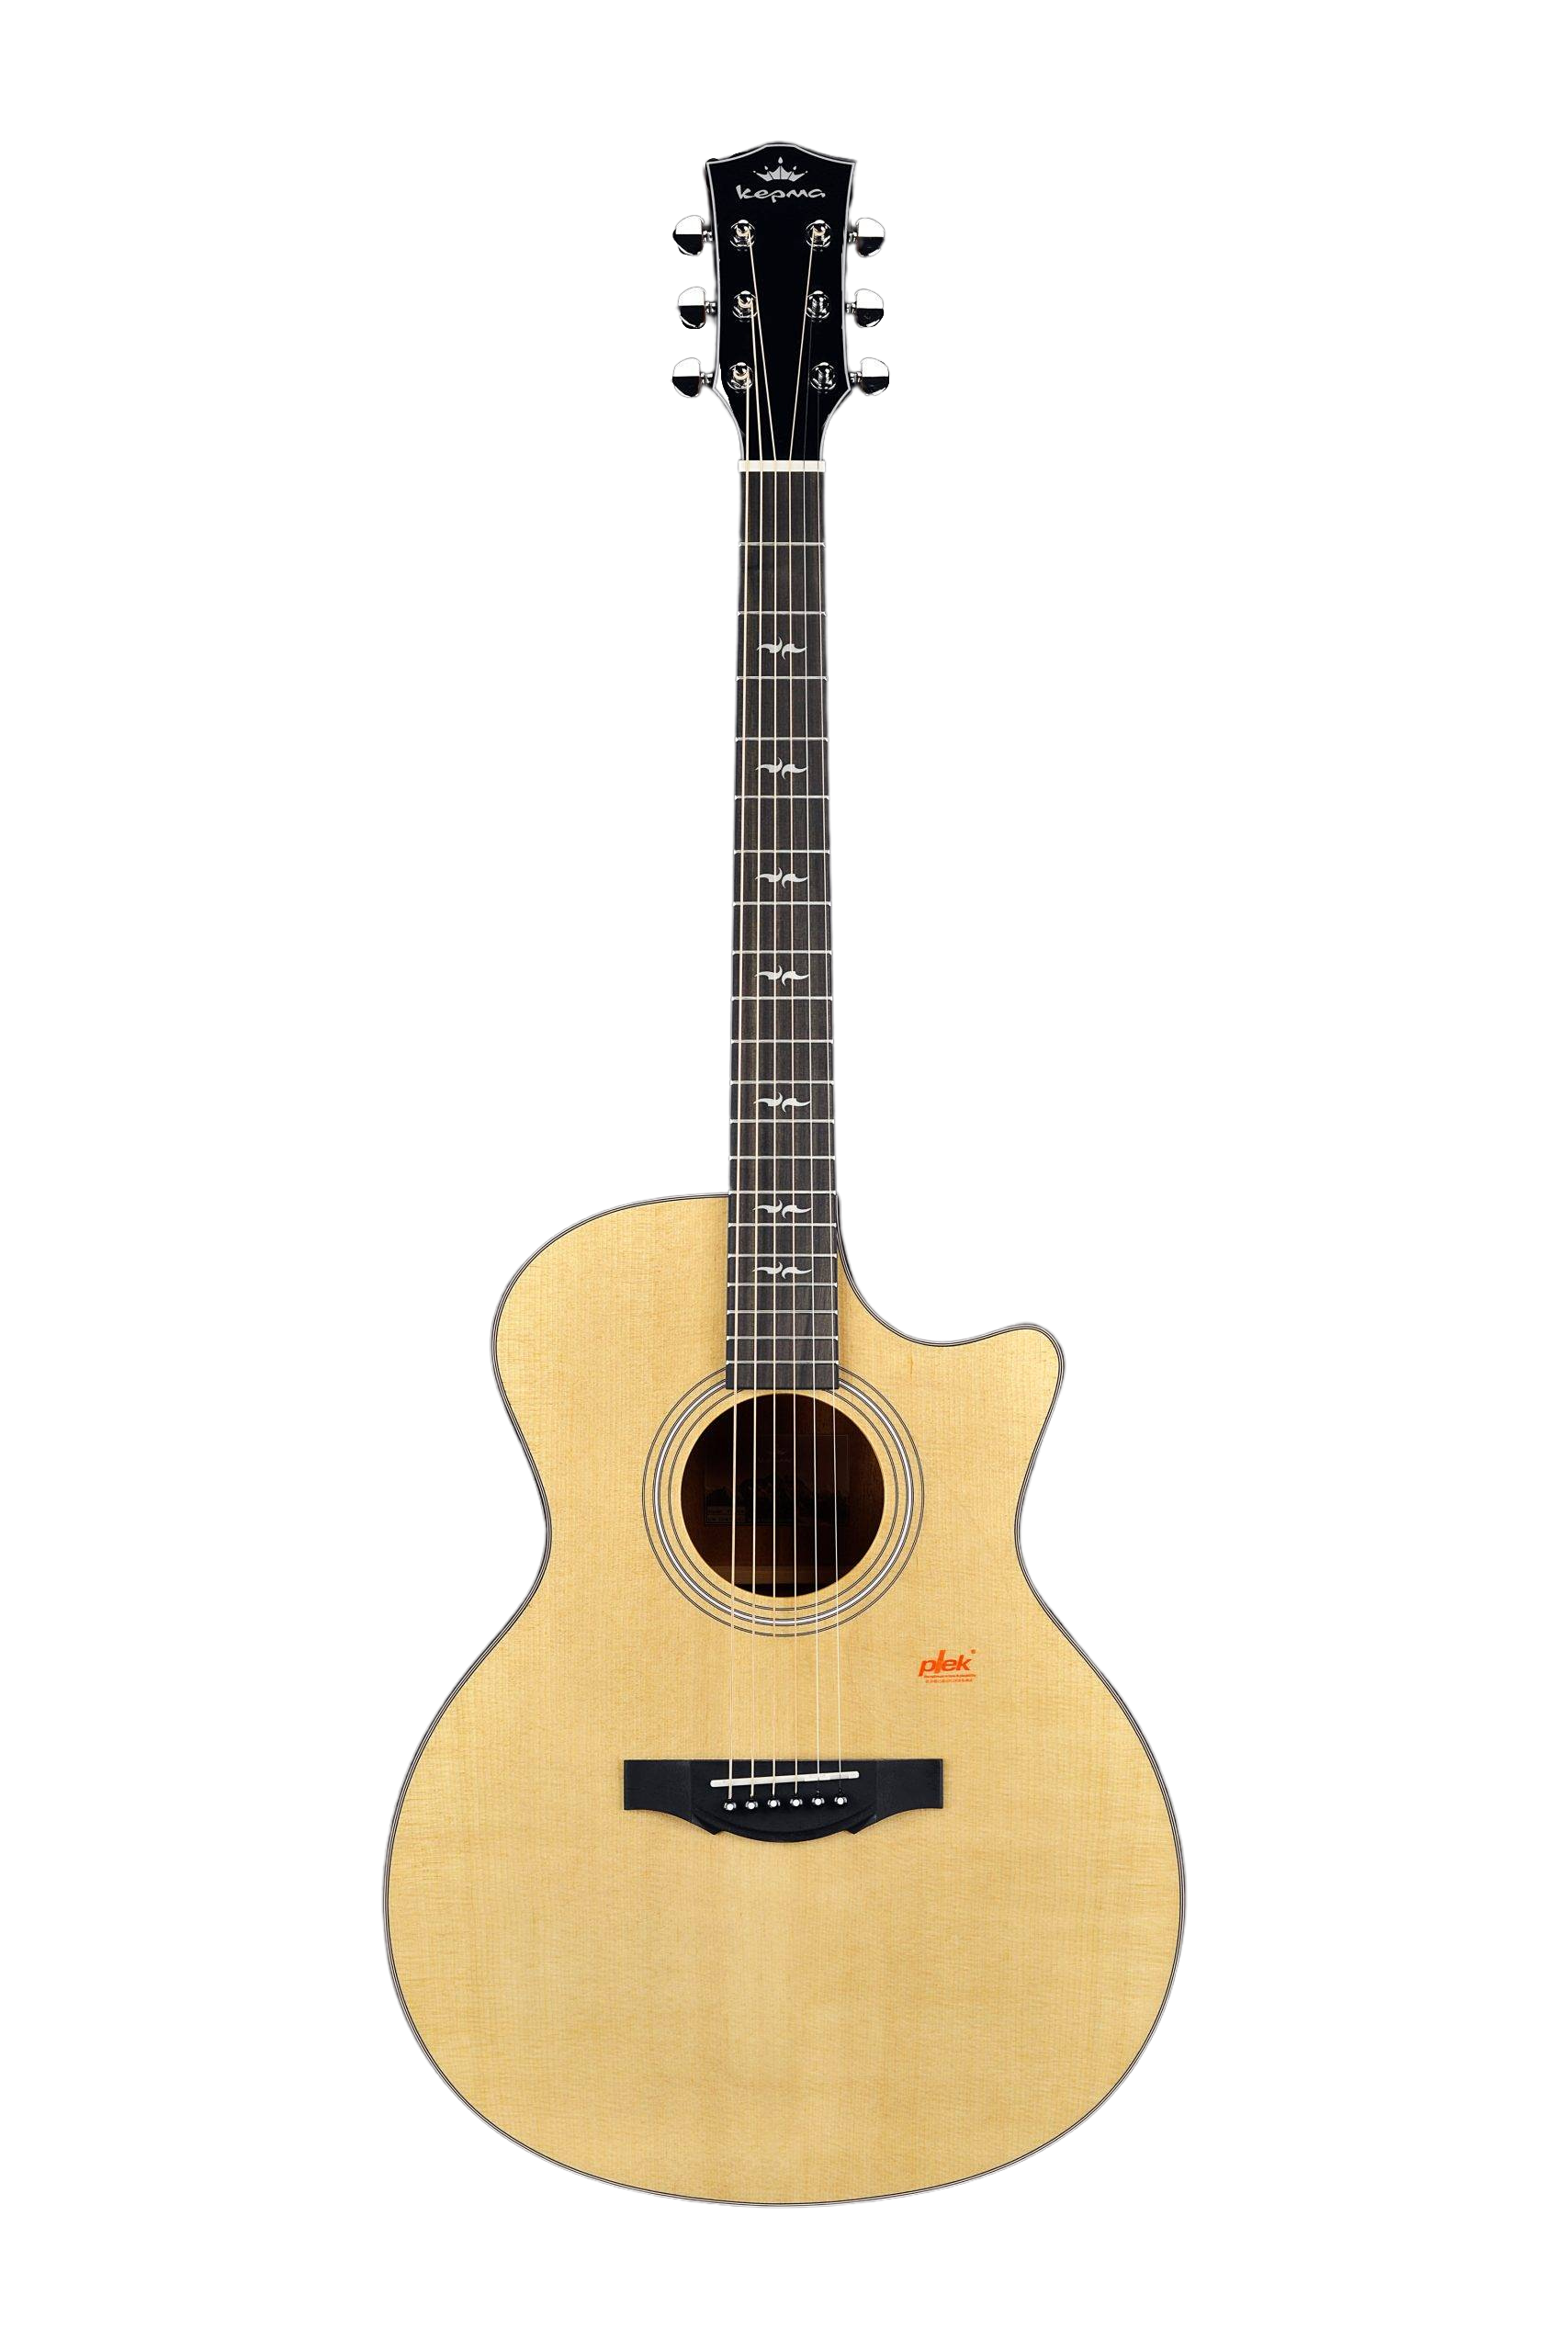 Kepma F1 GA Solid Top Acoustic Guitar with gig bag